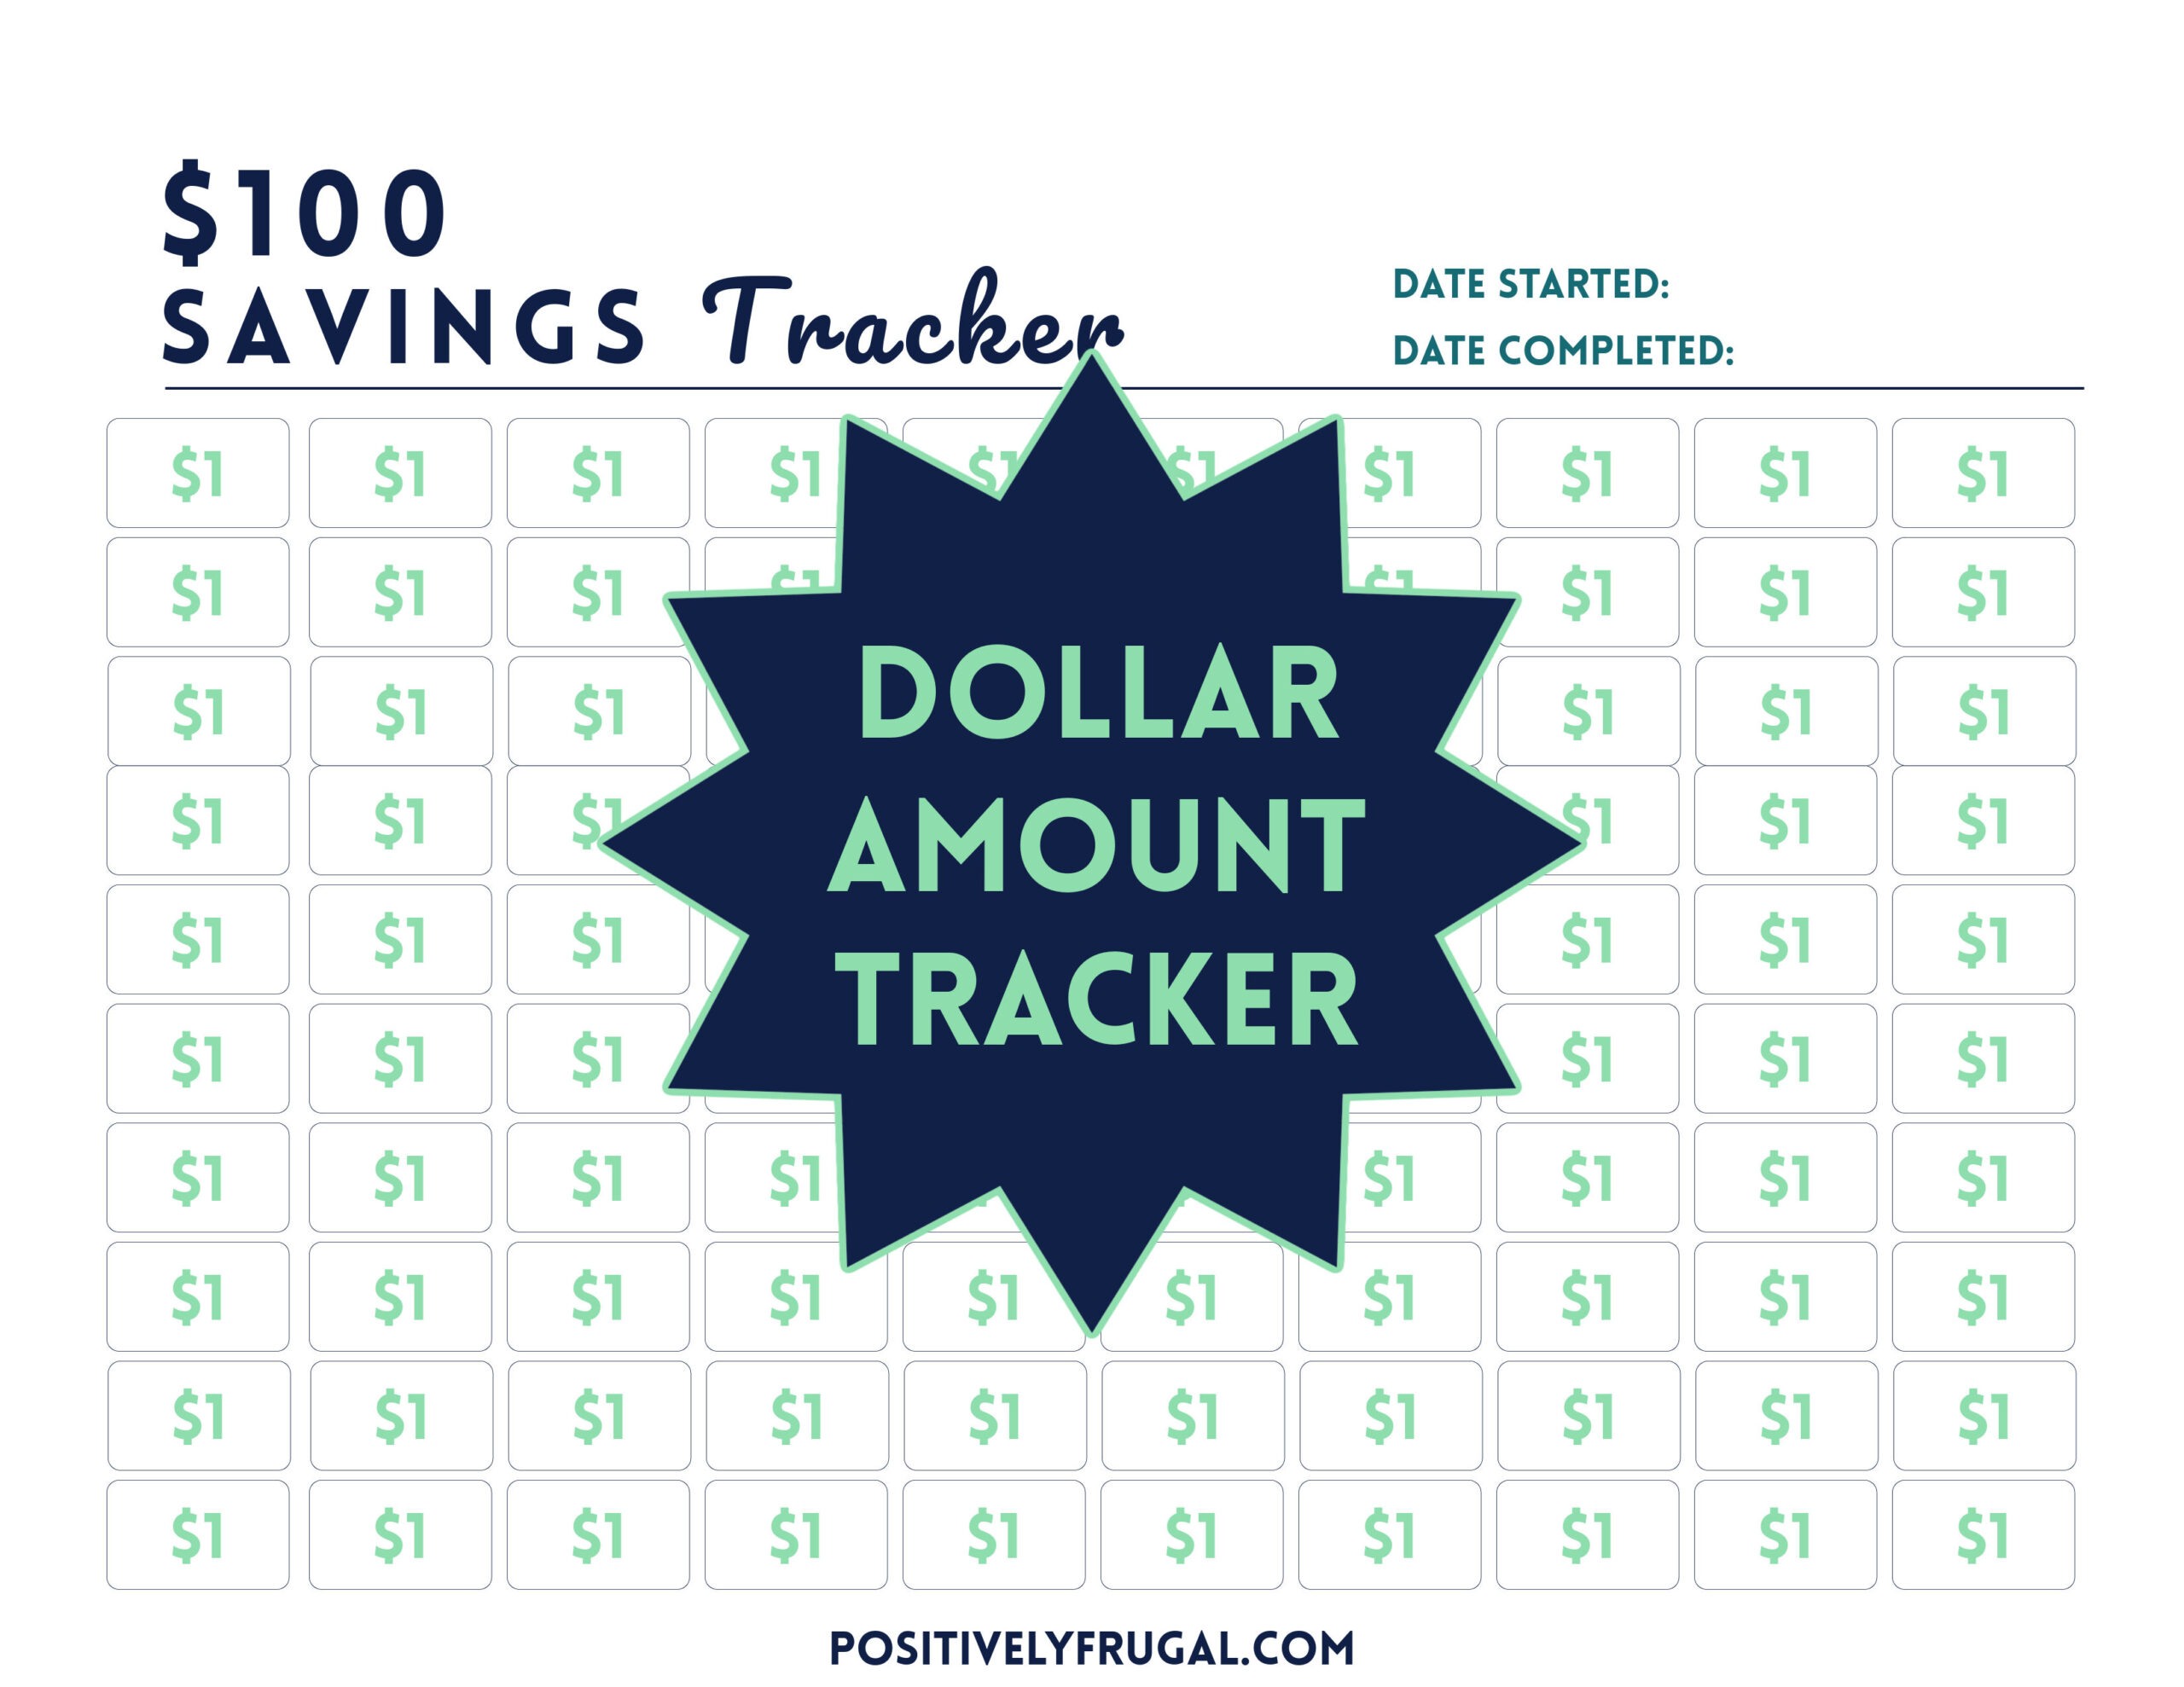 Dollar Amount Tracker by PositivelyFrugal.com